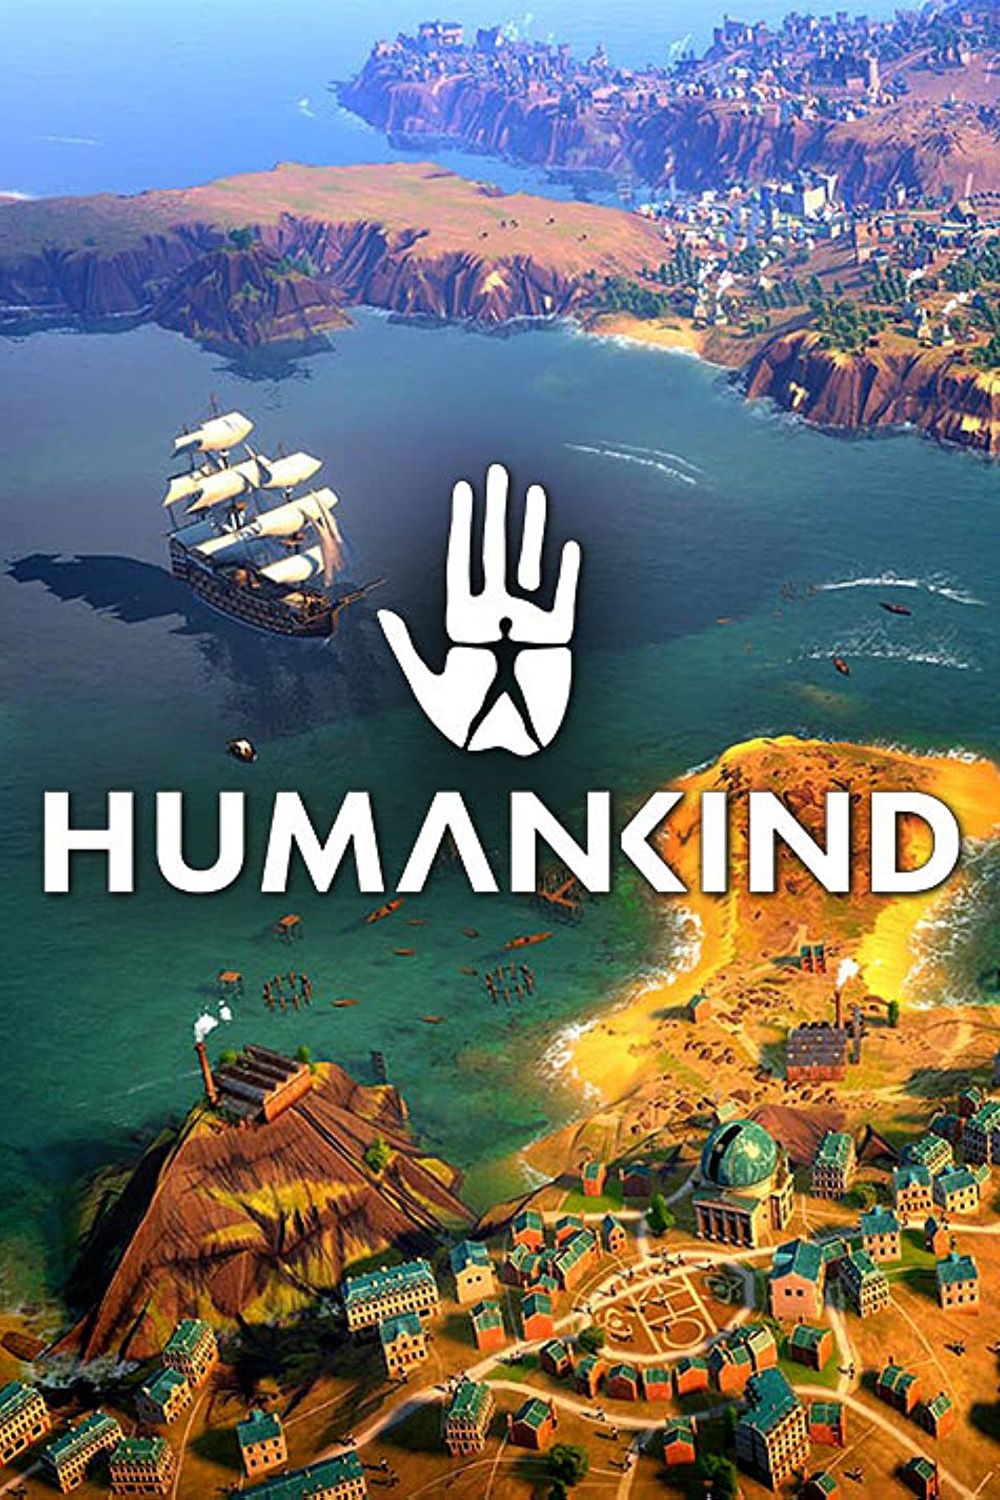 Humankind game